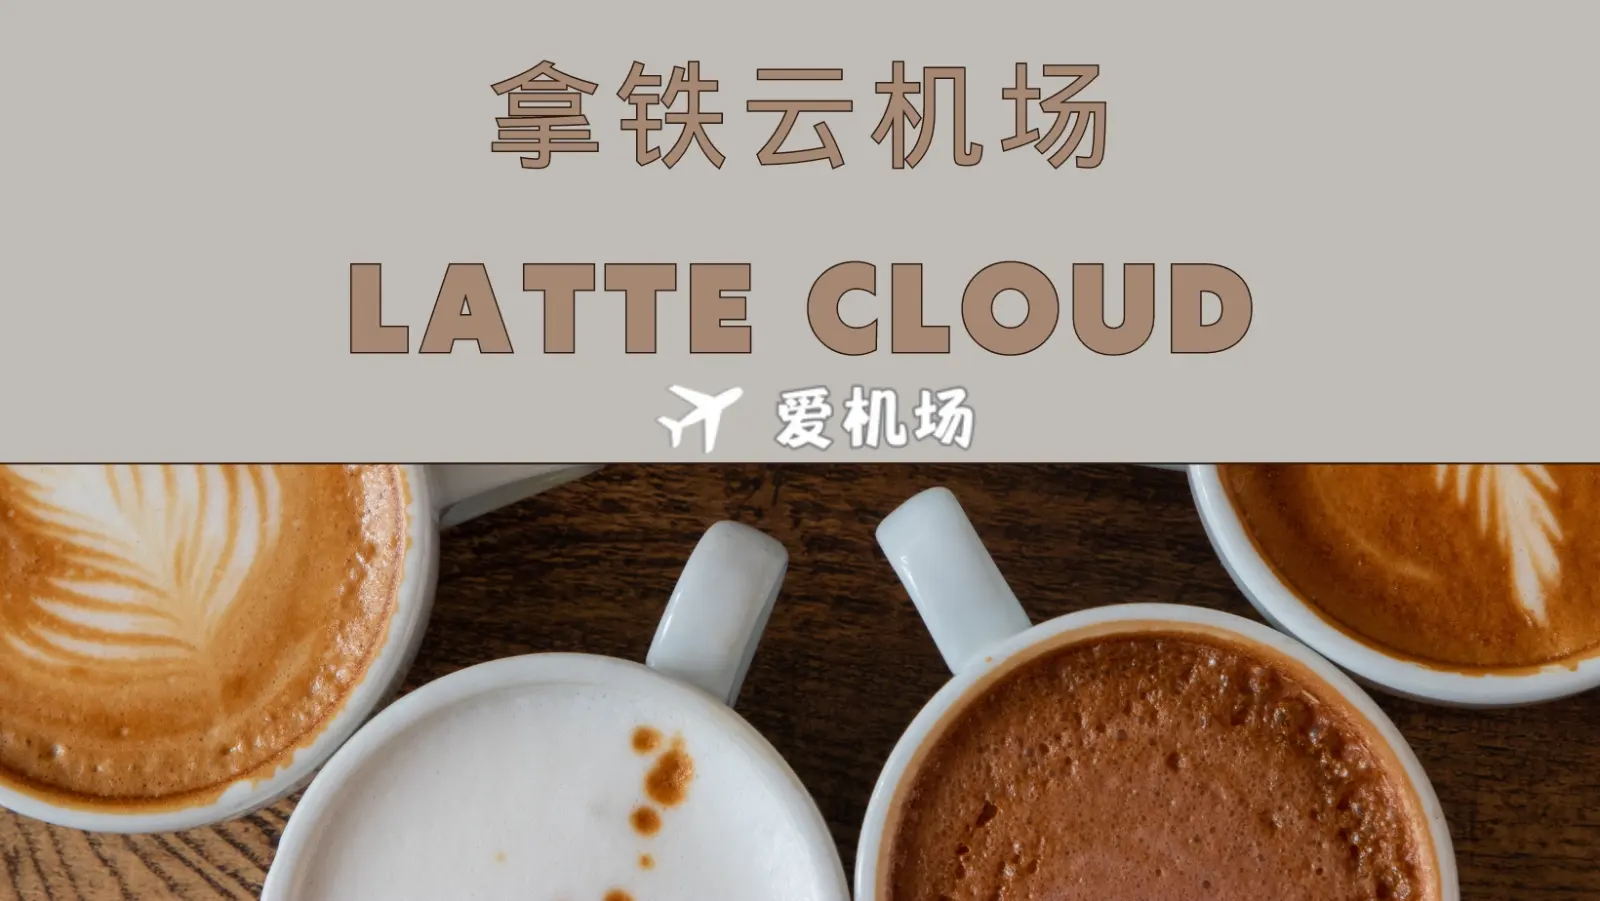 latte cloud 拿铁云机场